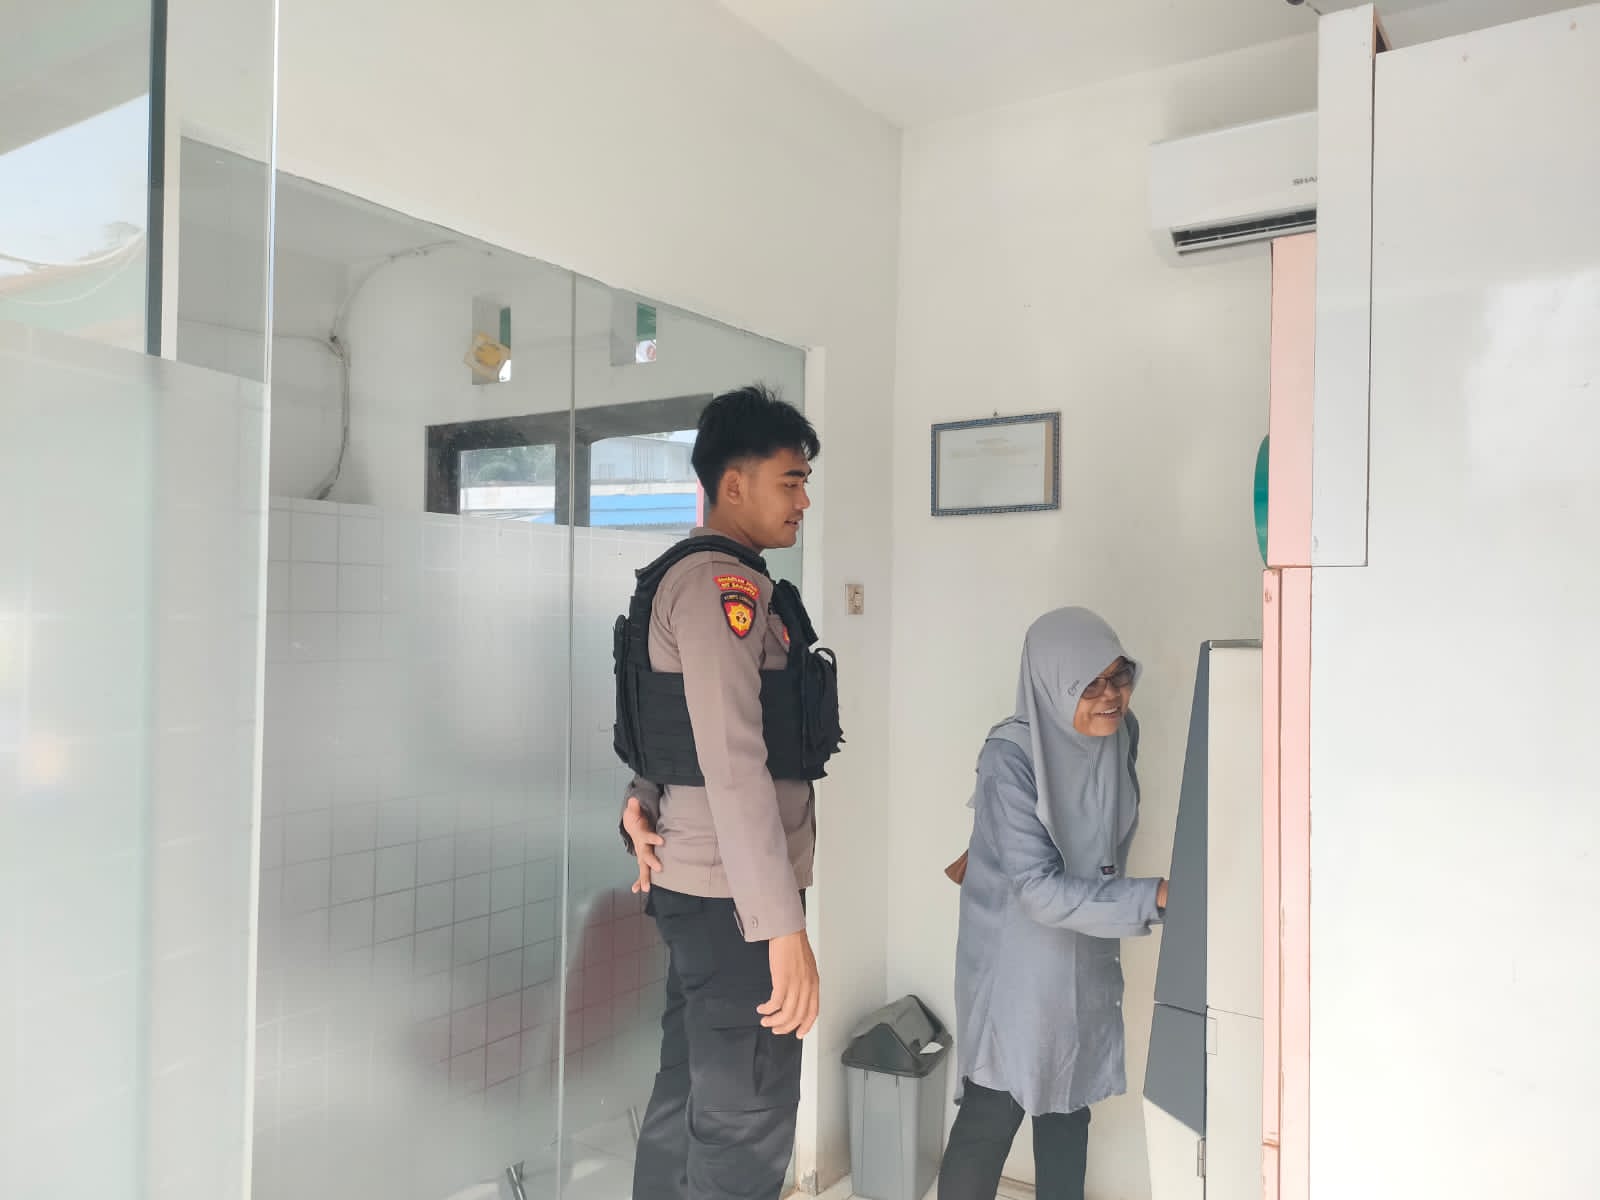 Patroli Objek Vital, Personel Polsek Ketahun Bantu Warga Kesulitan Akses ATM